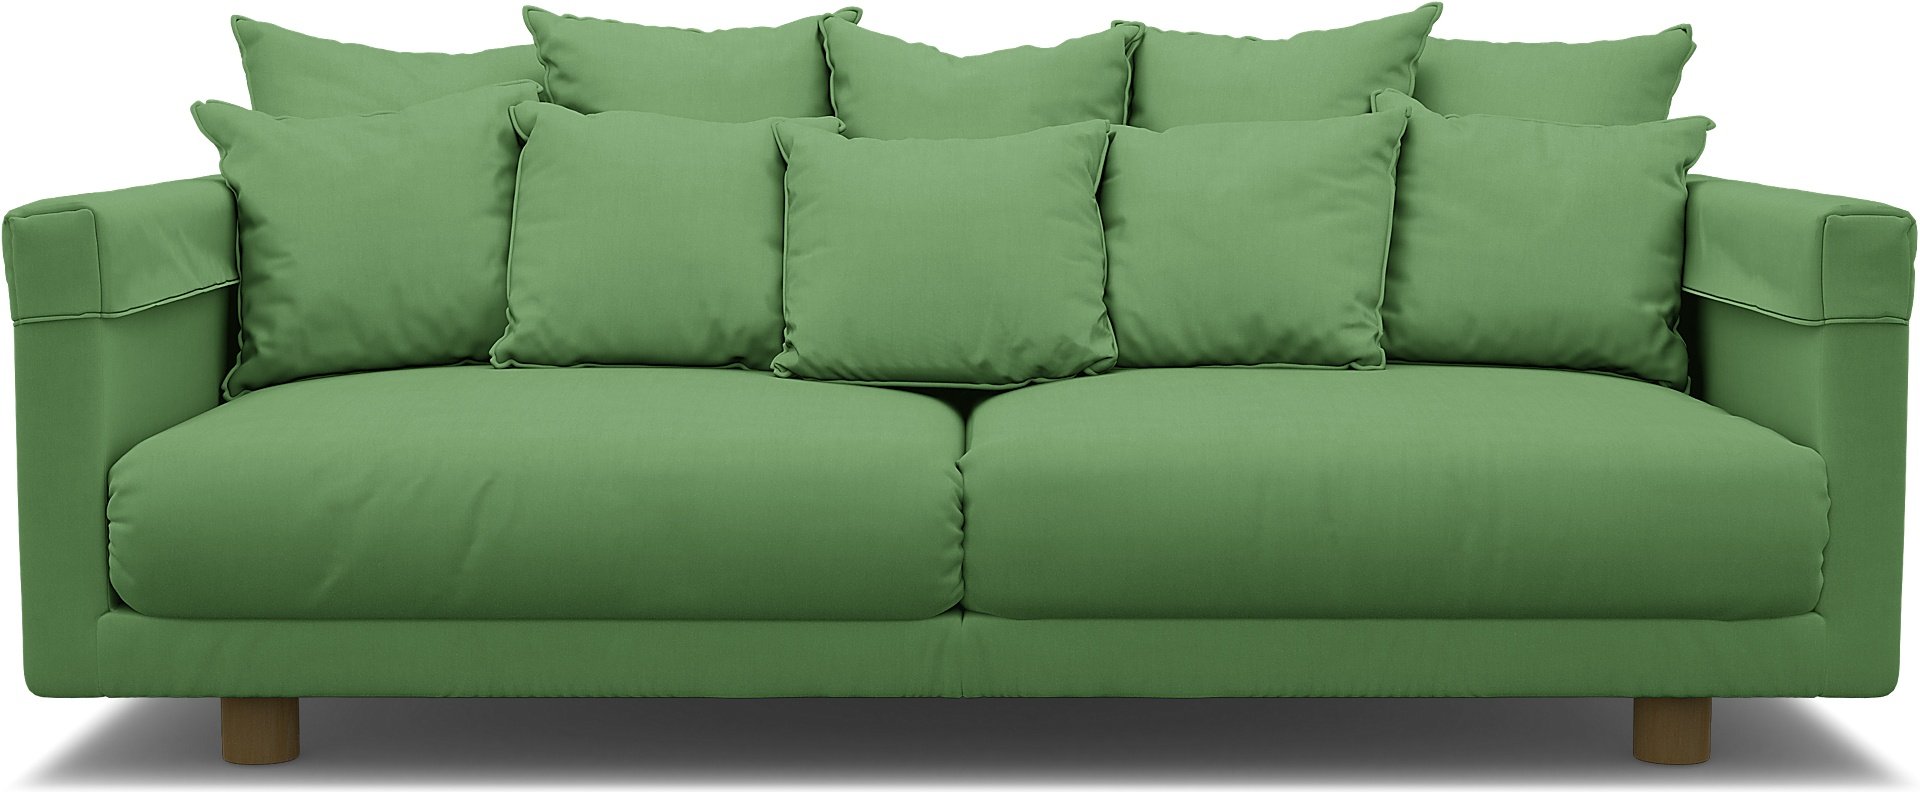 IKEA - Stockholm 2017 3 Seater Sofa Cover, Apple Green, Linen - Bemz